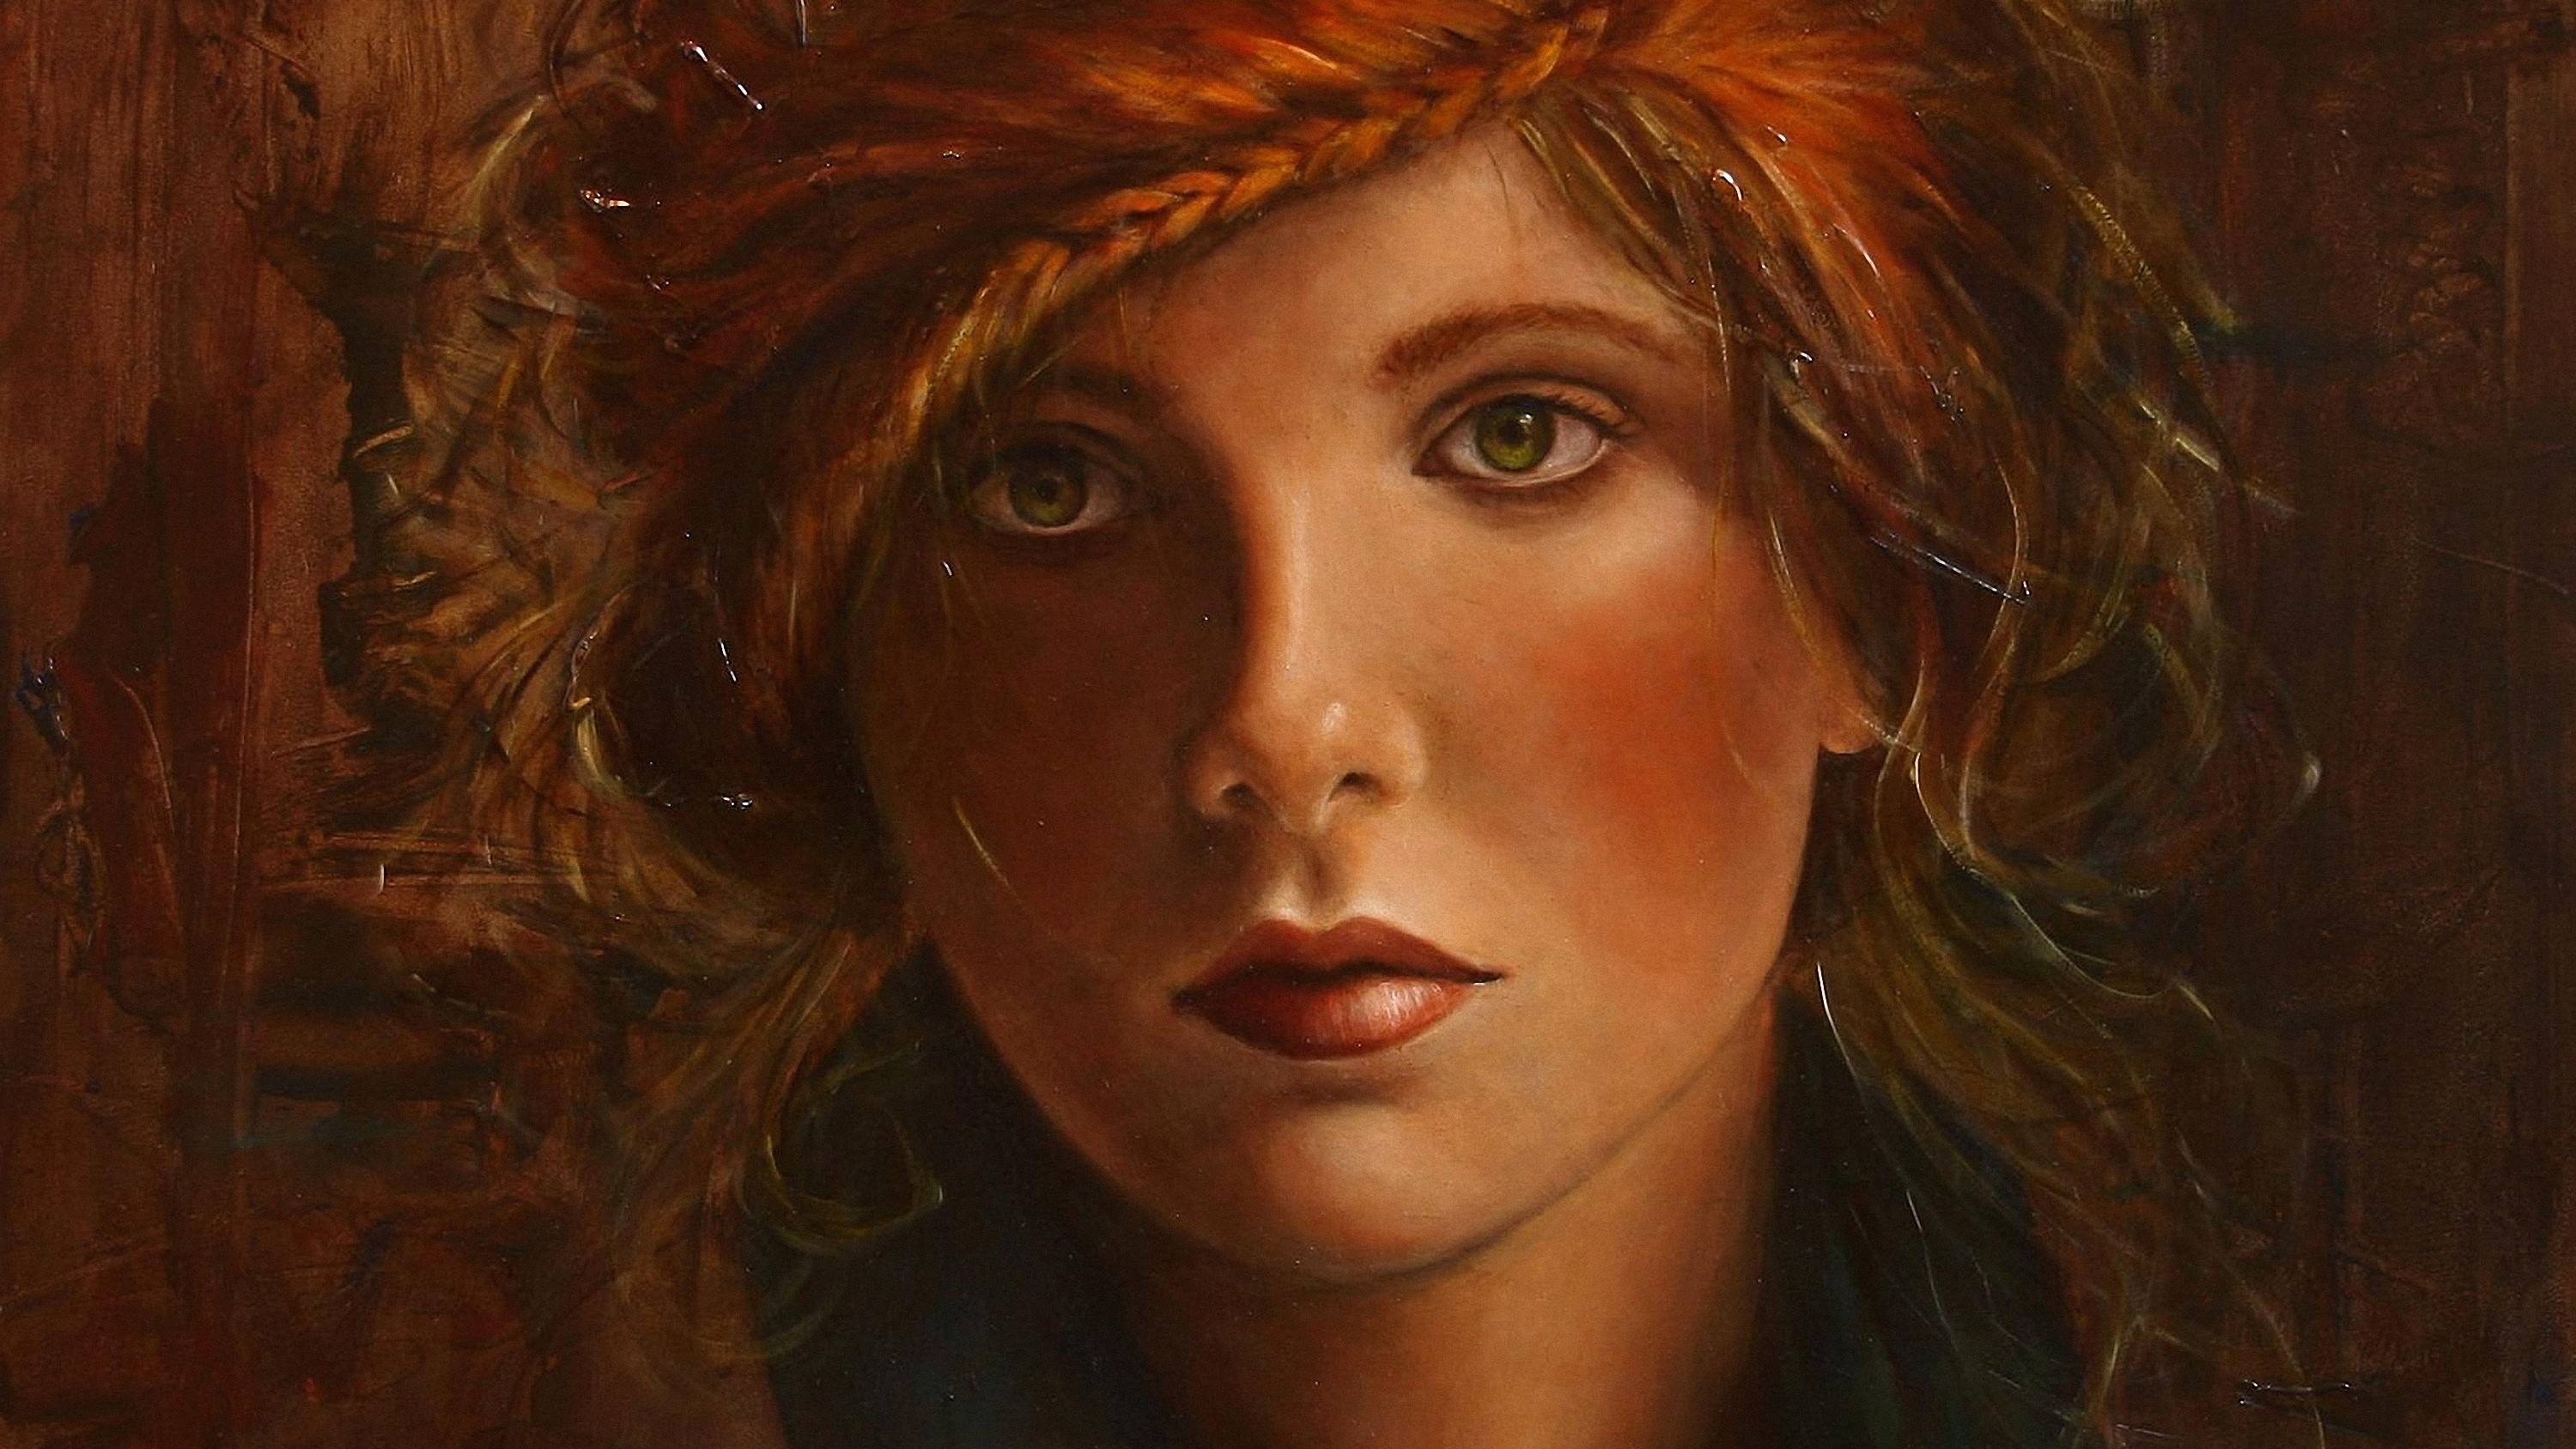 General 3000x1688 women portrait painting Liseth Visser artwork face closeup red lipstick